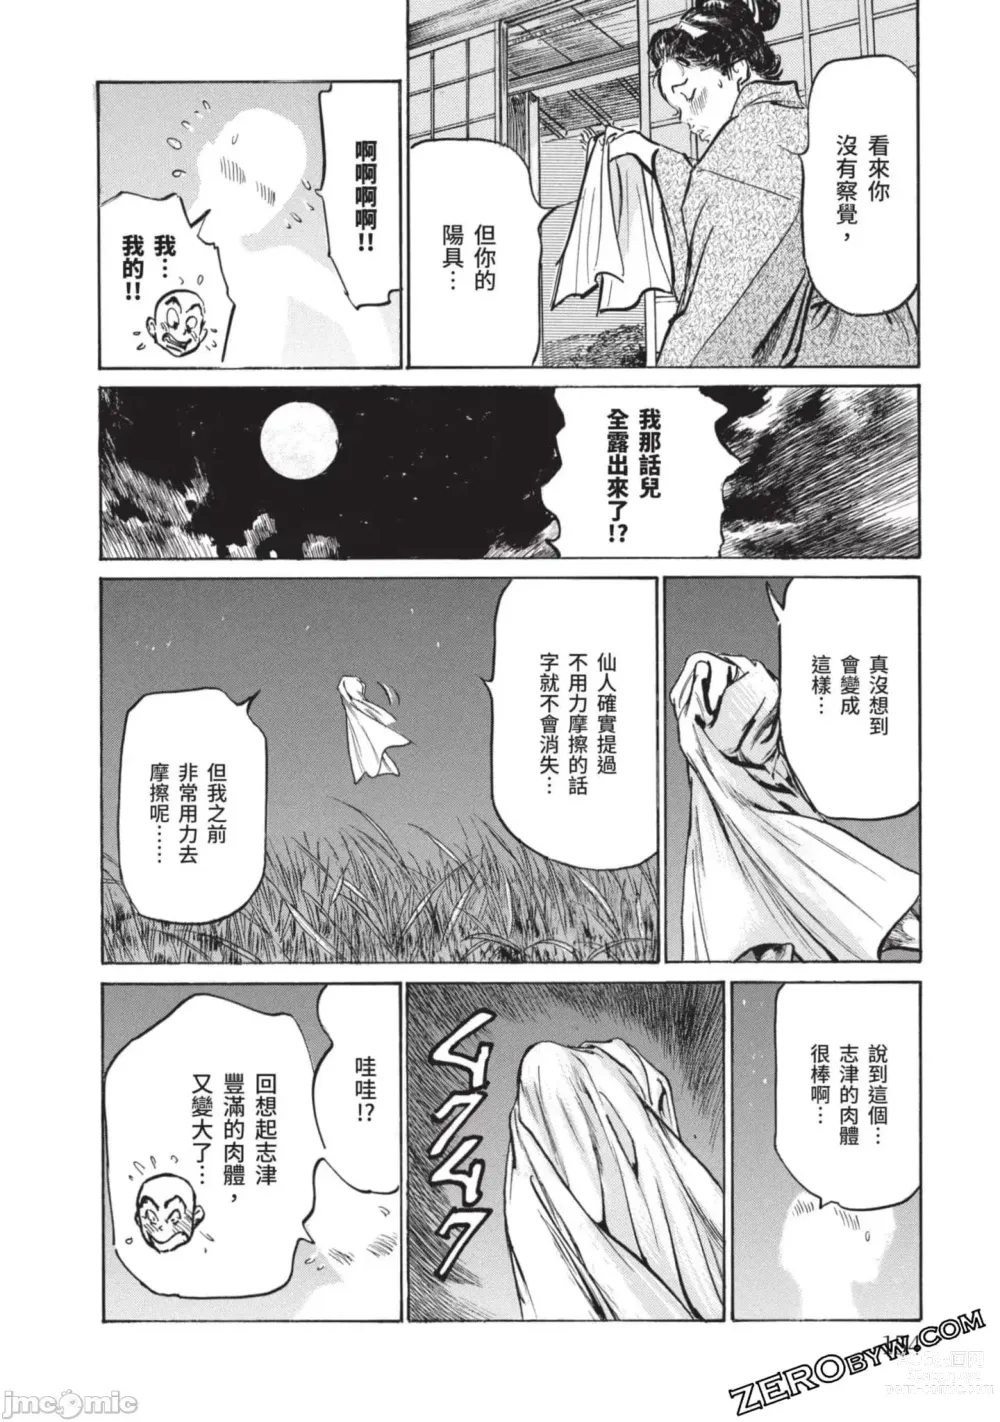 Page 153 of manga Inshuu Hiroku Midare Mandara 2